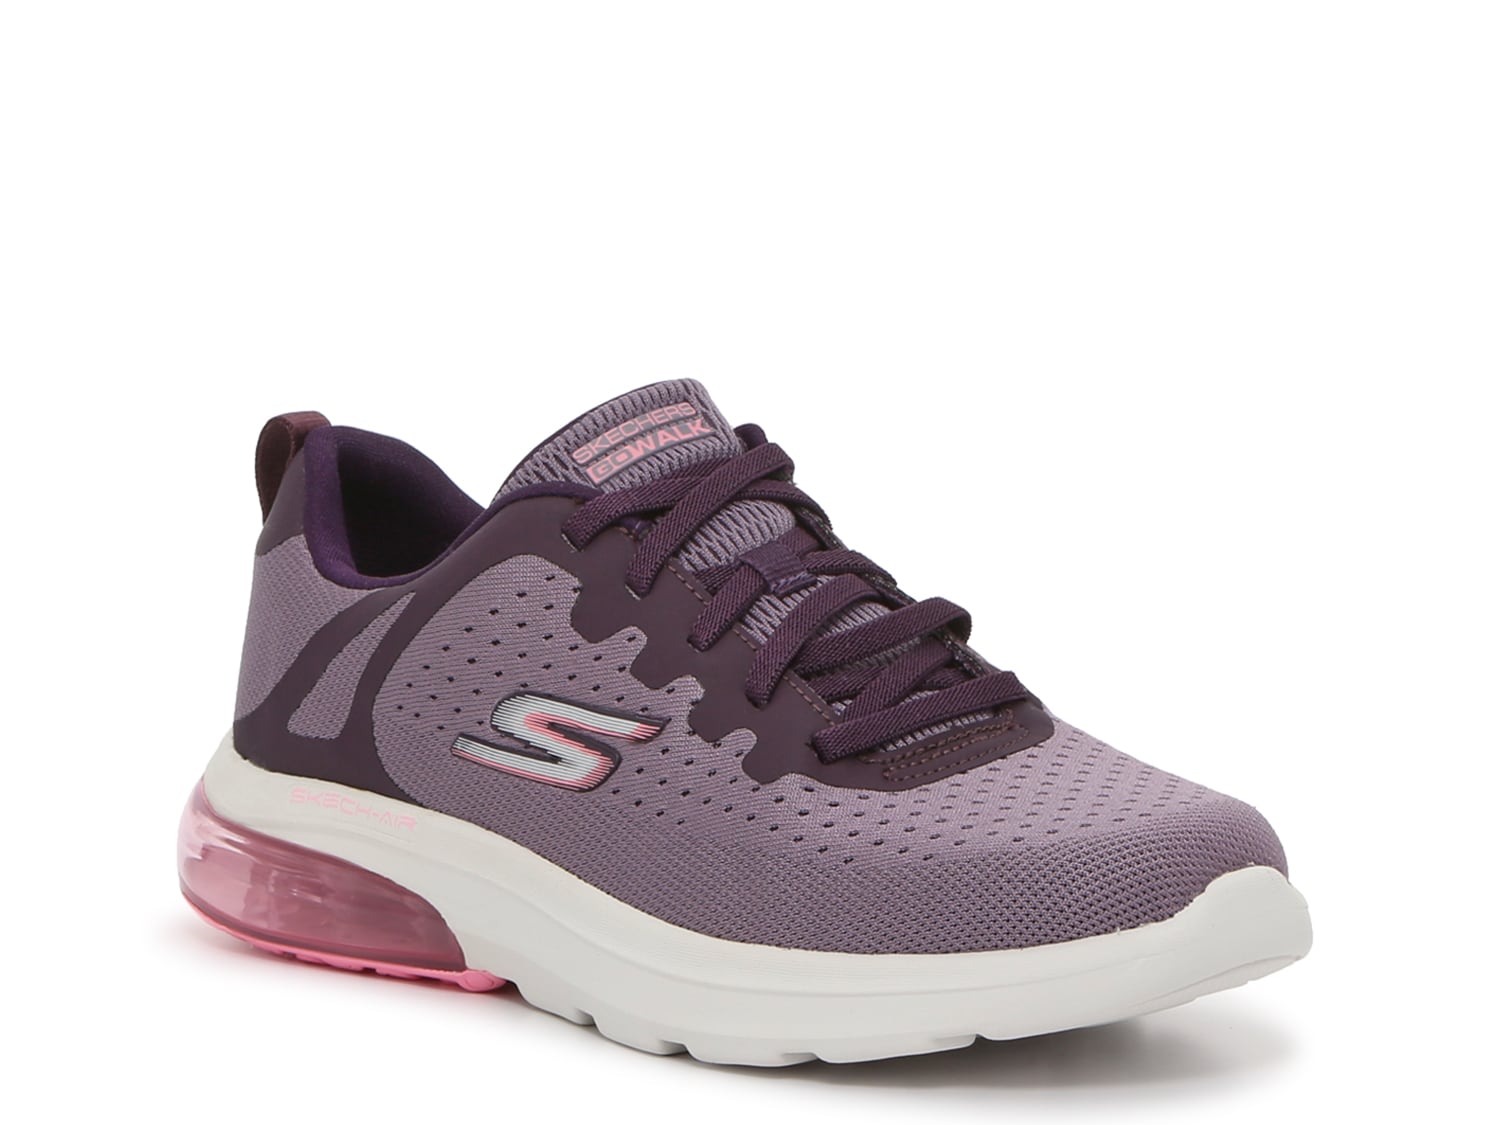 Skechers GO Walk Air 2.0 Classy Summer Sneaker - Women's - Free Shipping |